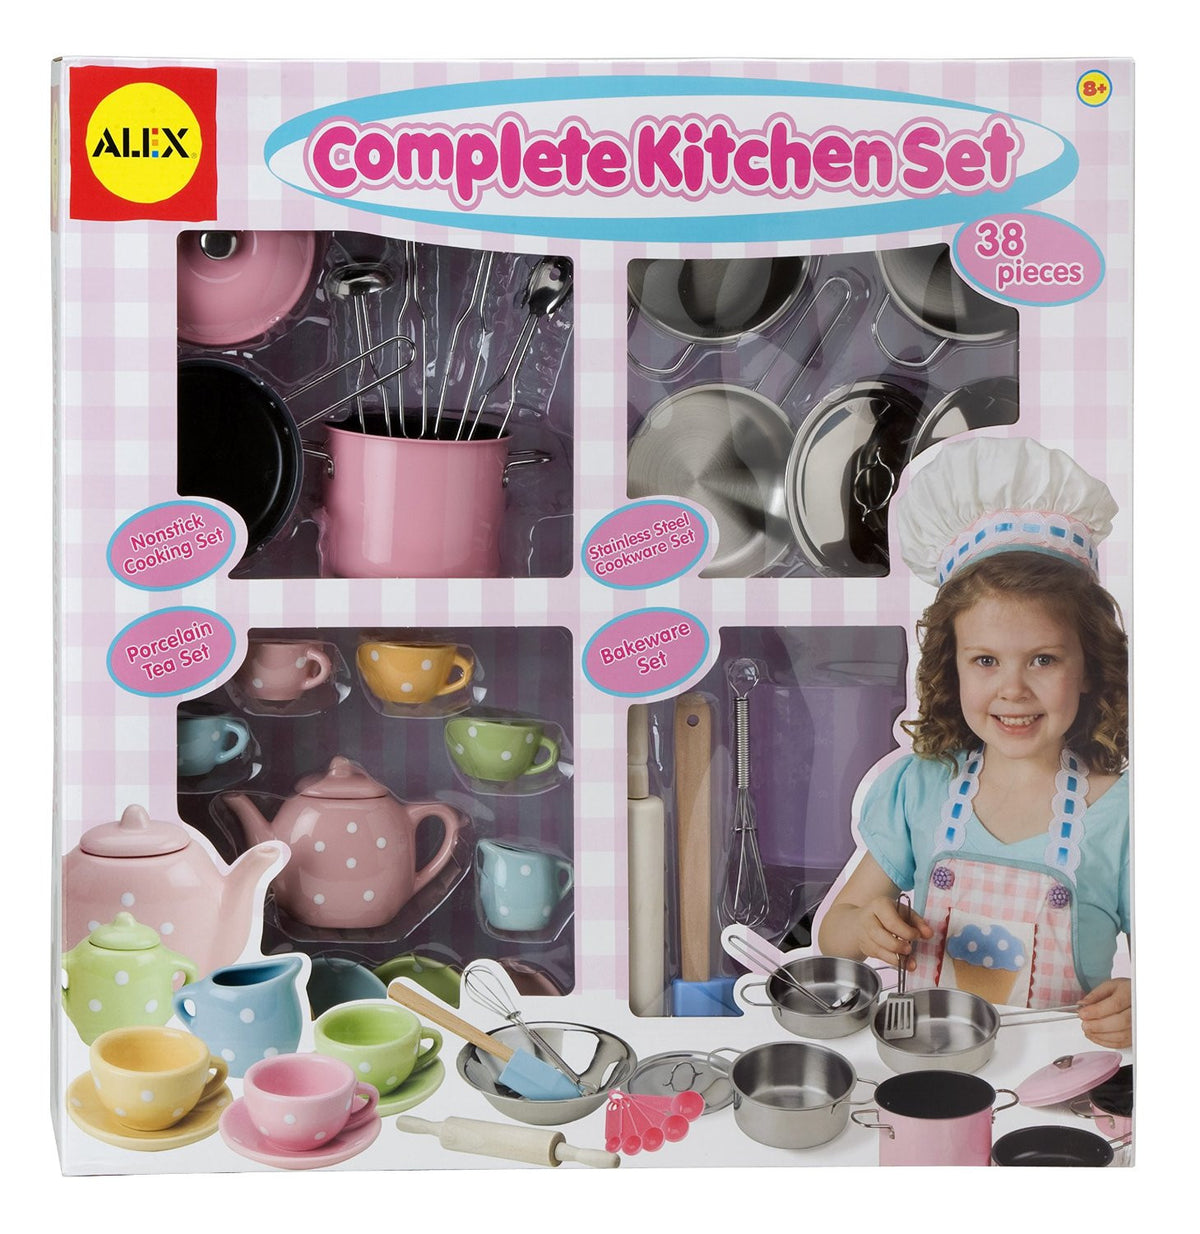 Китчен сет. Набор Китчен сет серый. Набор детской посуды Katie's Kitchen сборка. Kitchen Set Toys. Complete the toys